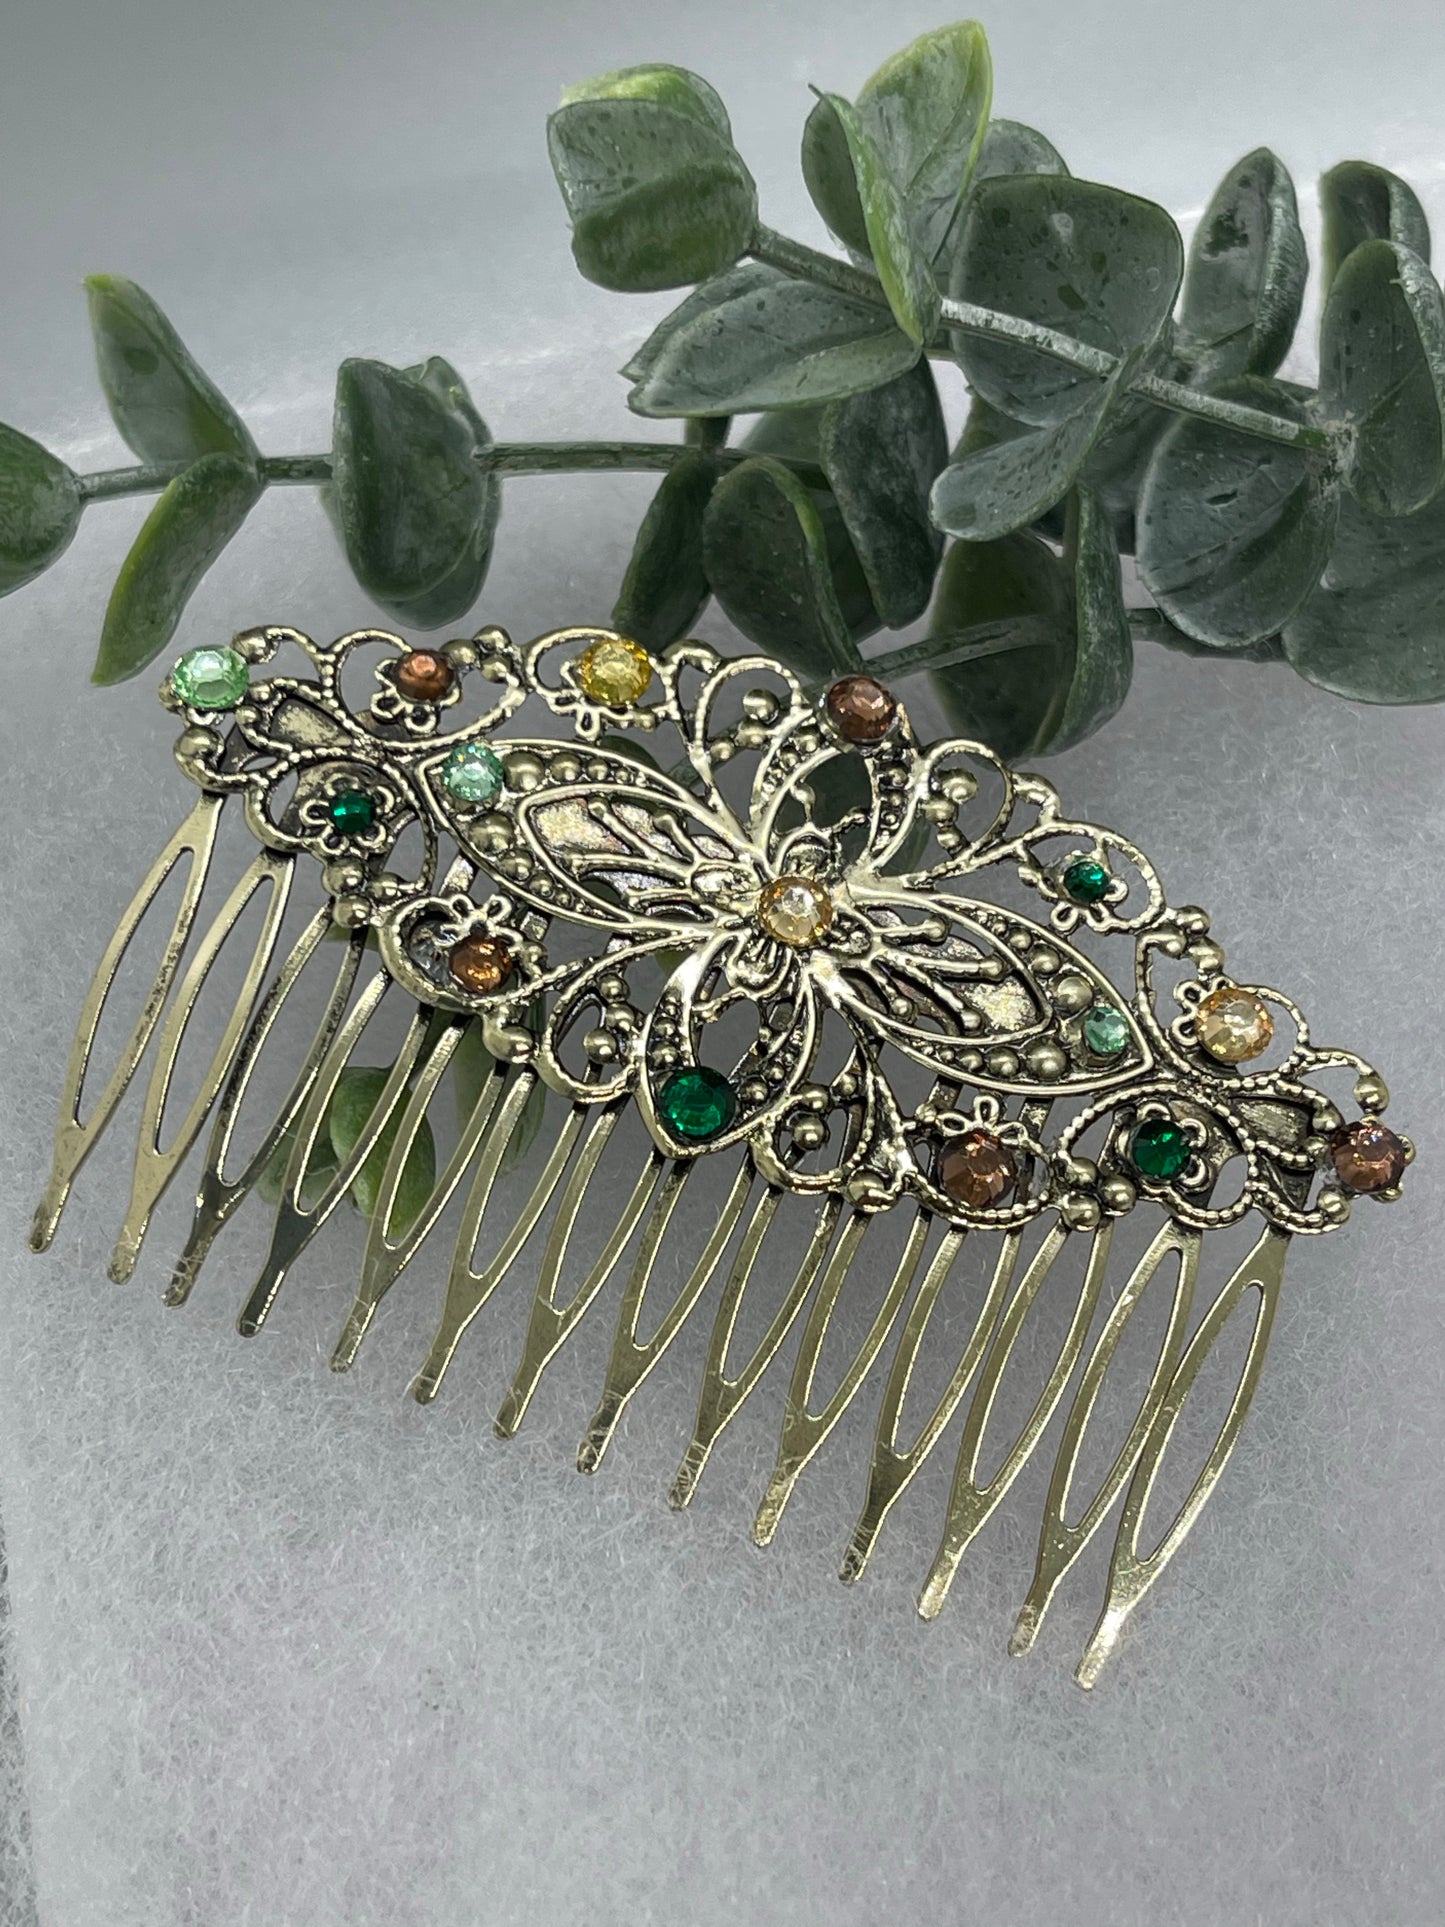 Camouflage crystal rhinestone 3.5” side Comb Antique vintage style bridal Wedding shower sweet 16 birthday princess bridesmaid hair accessory